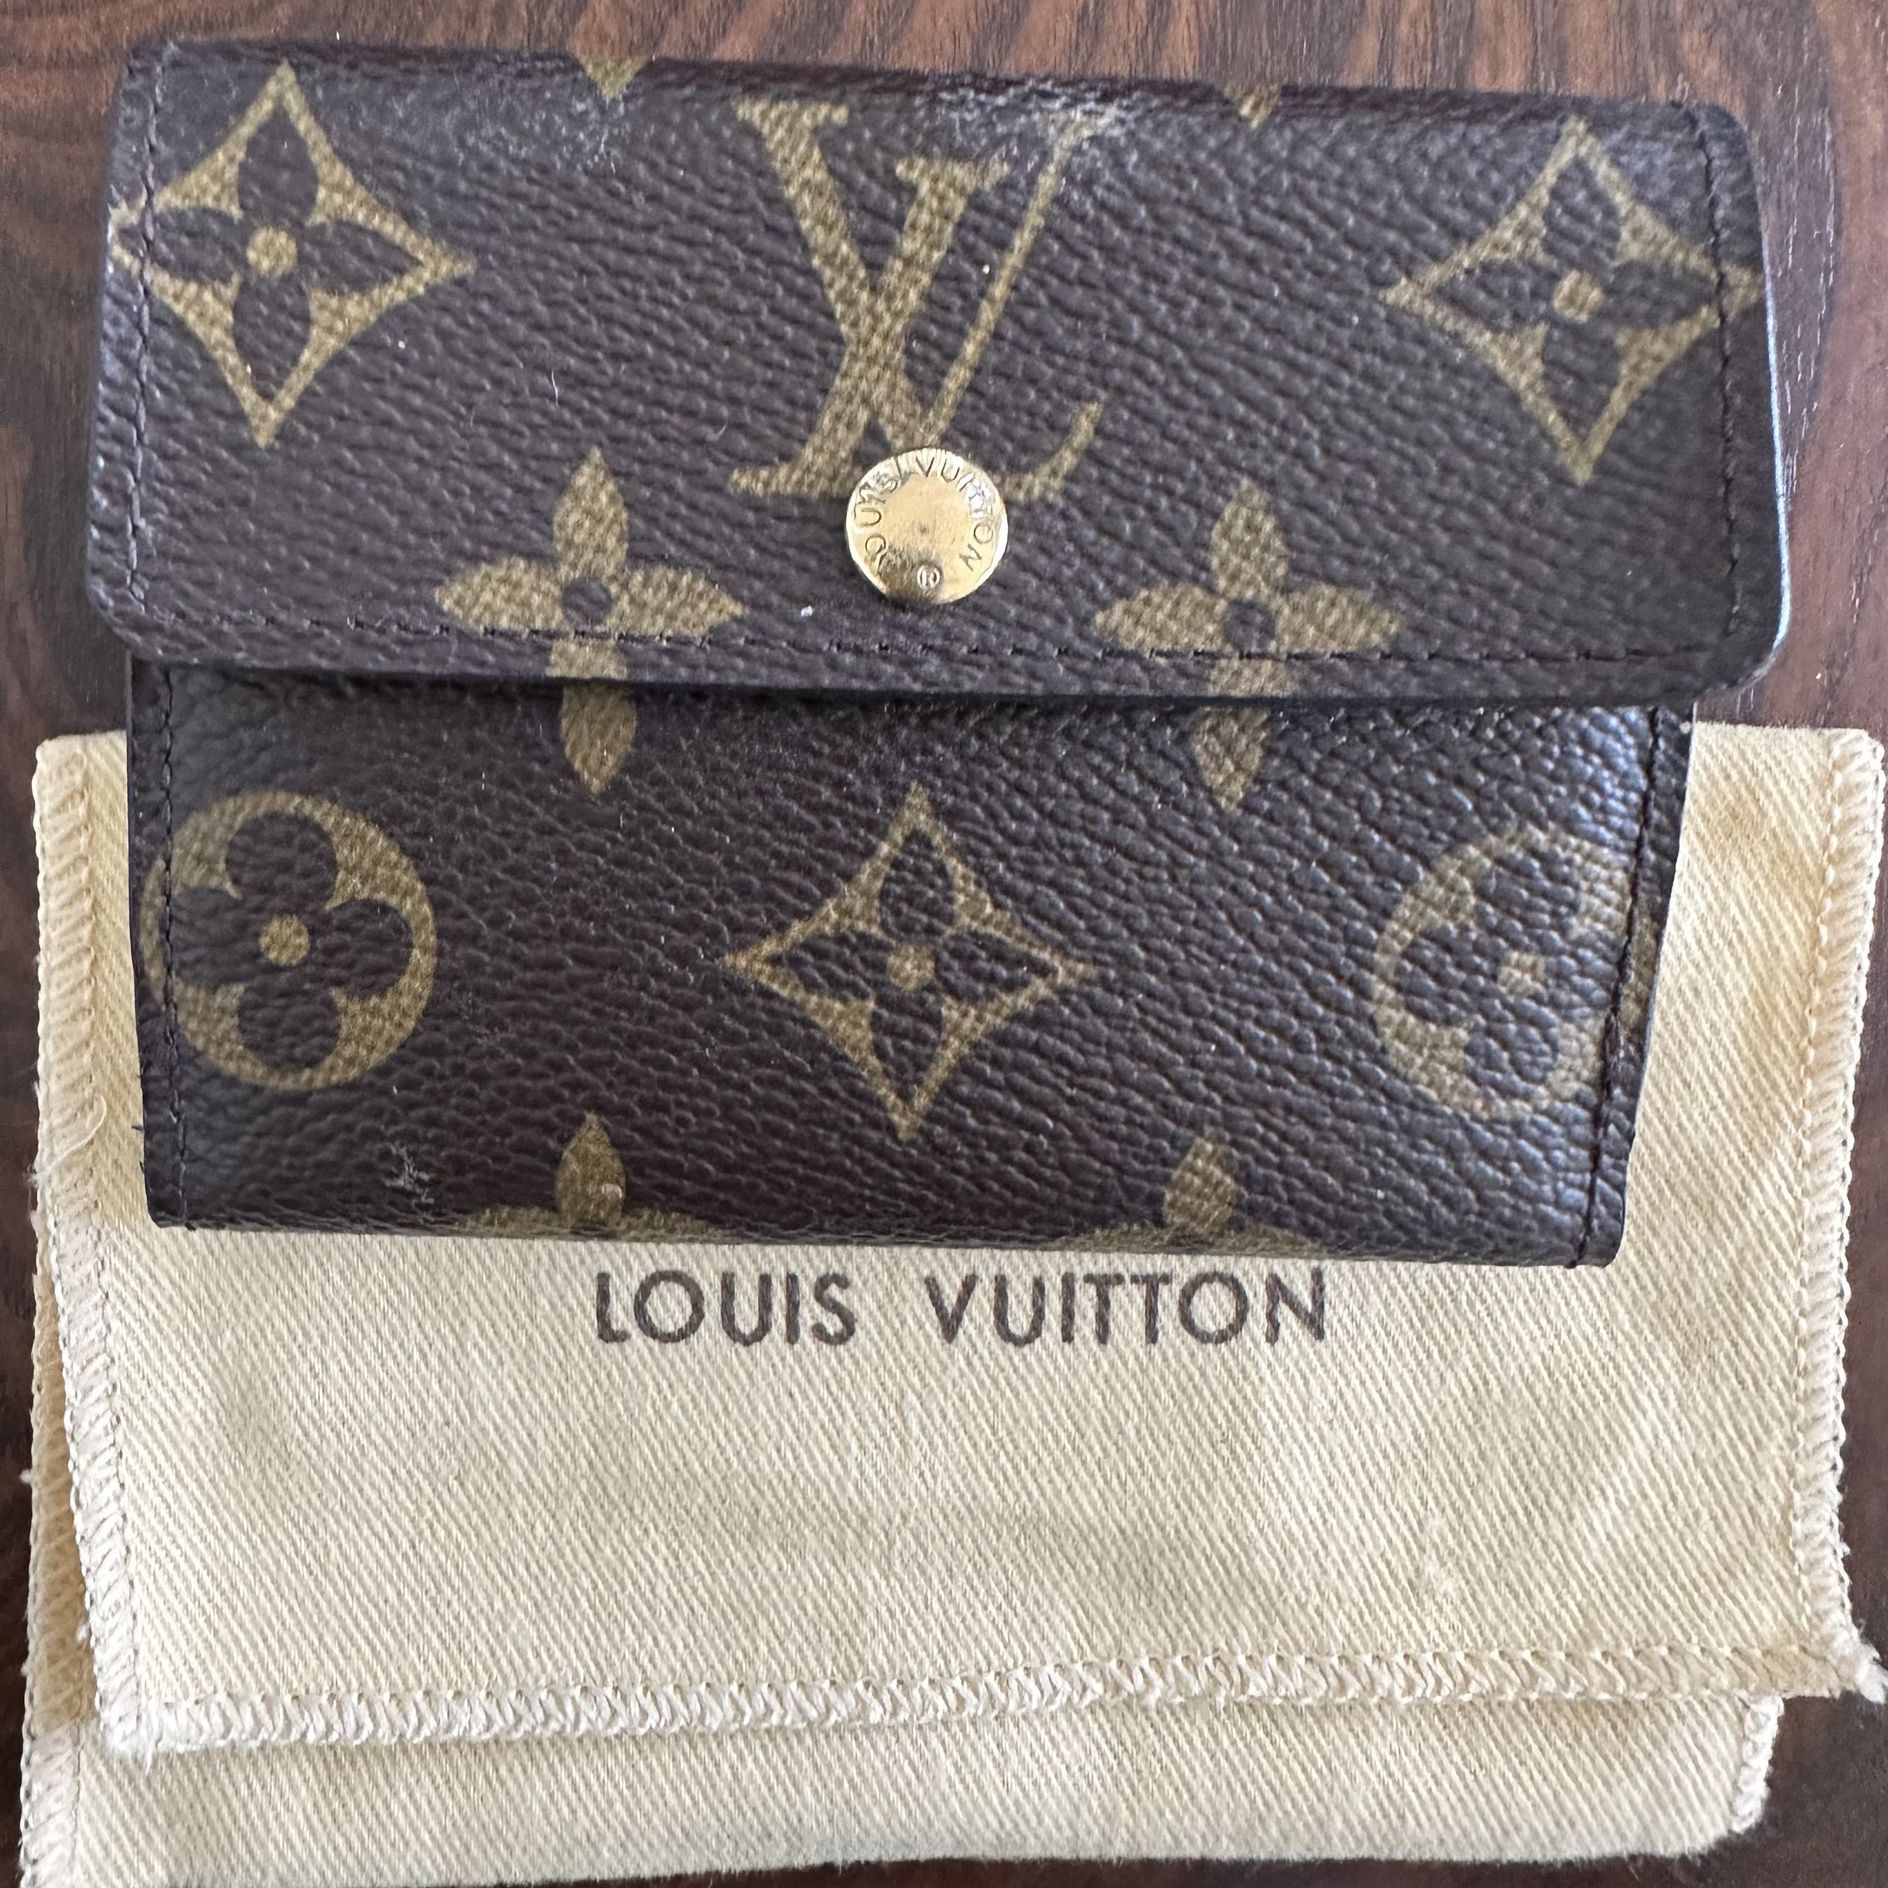 Louie Vuitton Monogram Credit Card Holder 